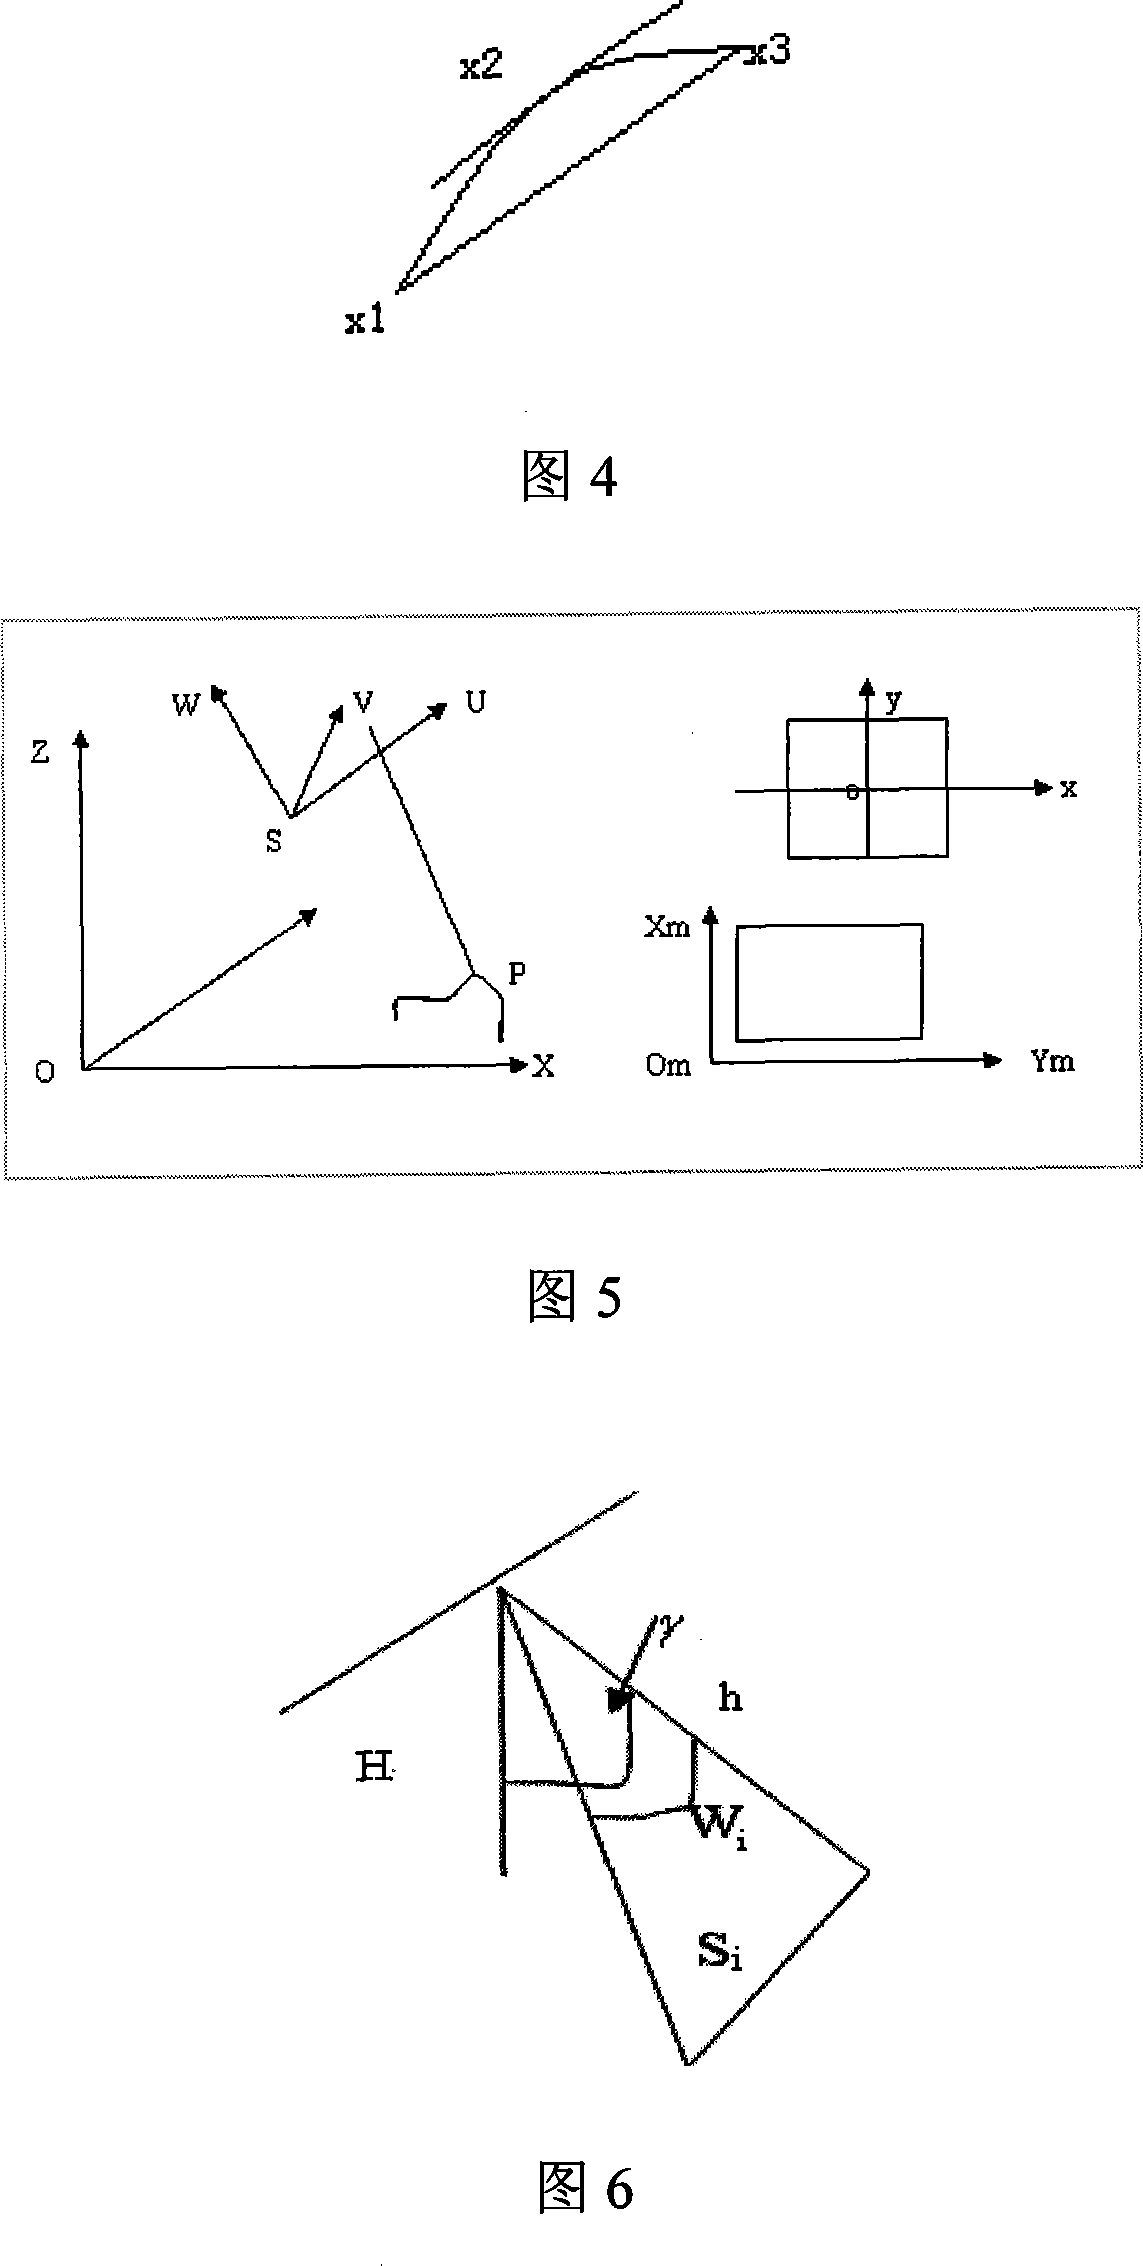 Navigation multiple spectrum scanner geometric approximate correction method under non gesture information condition